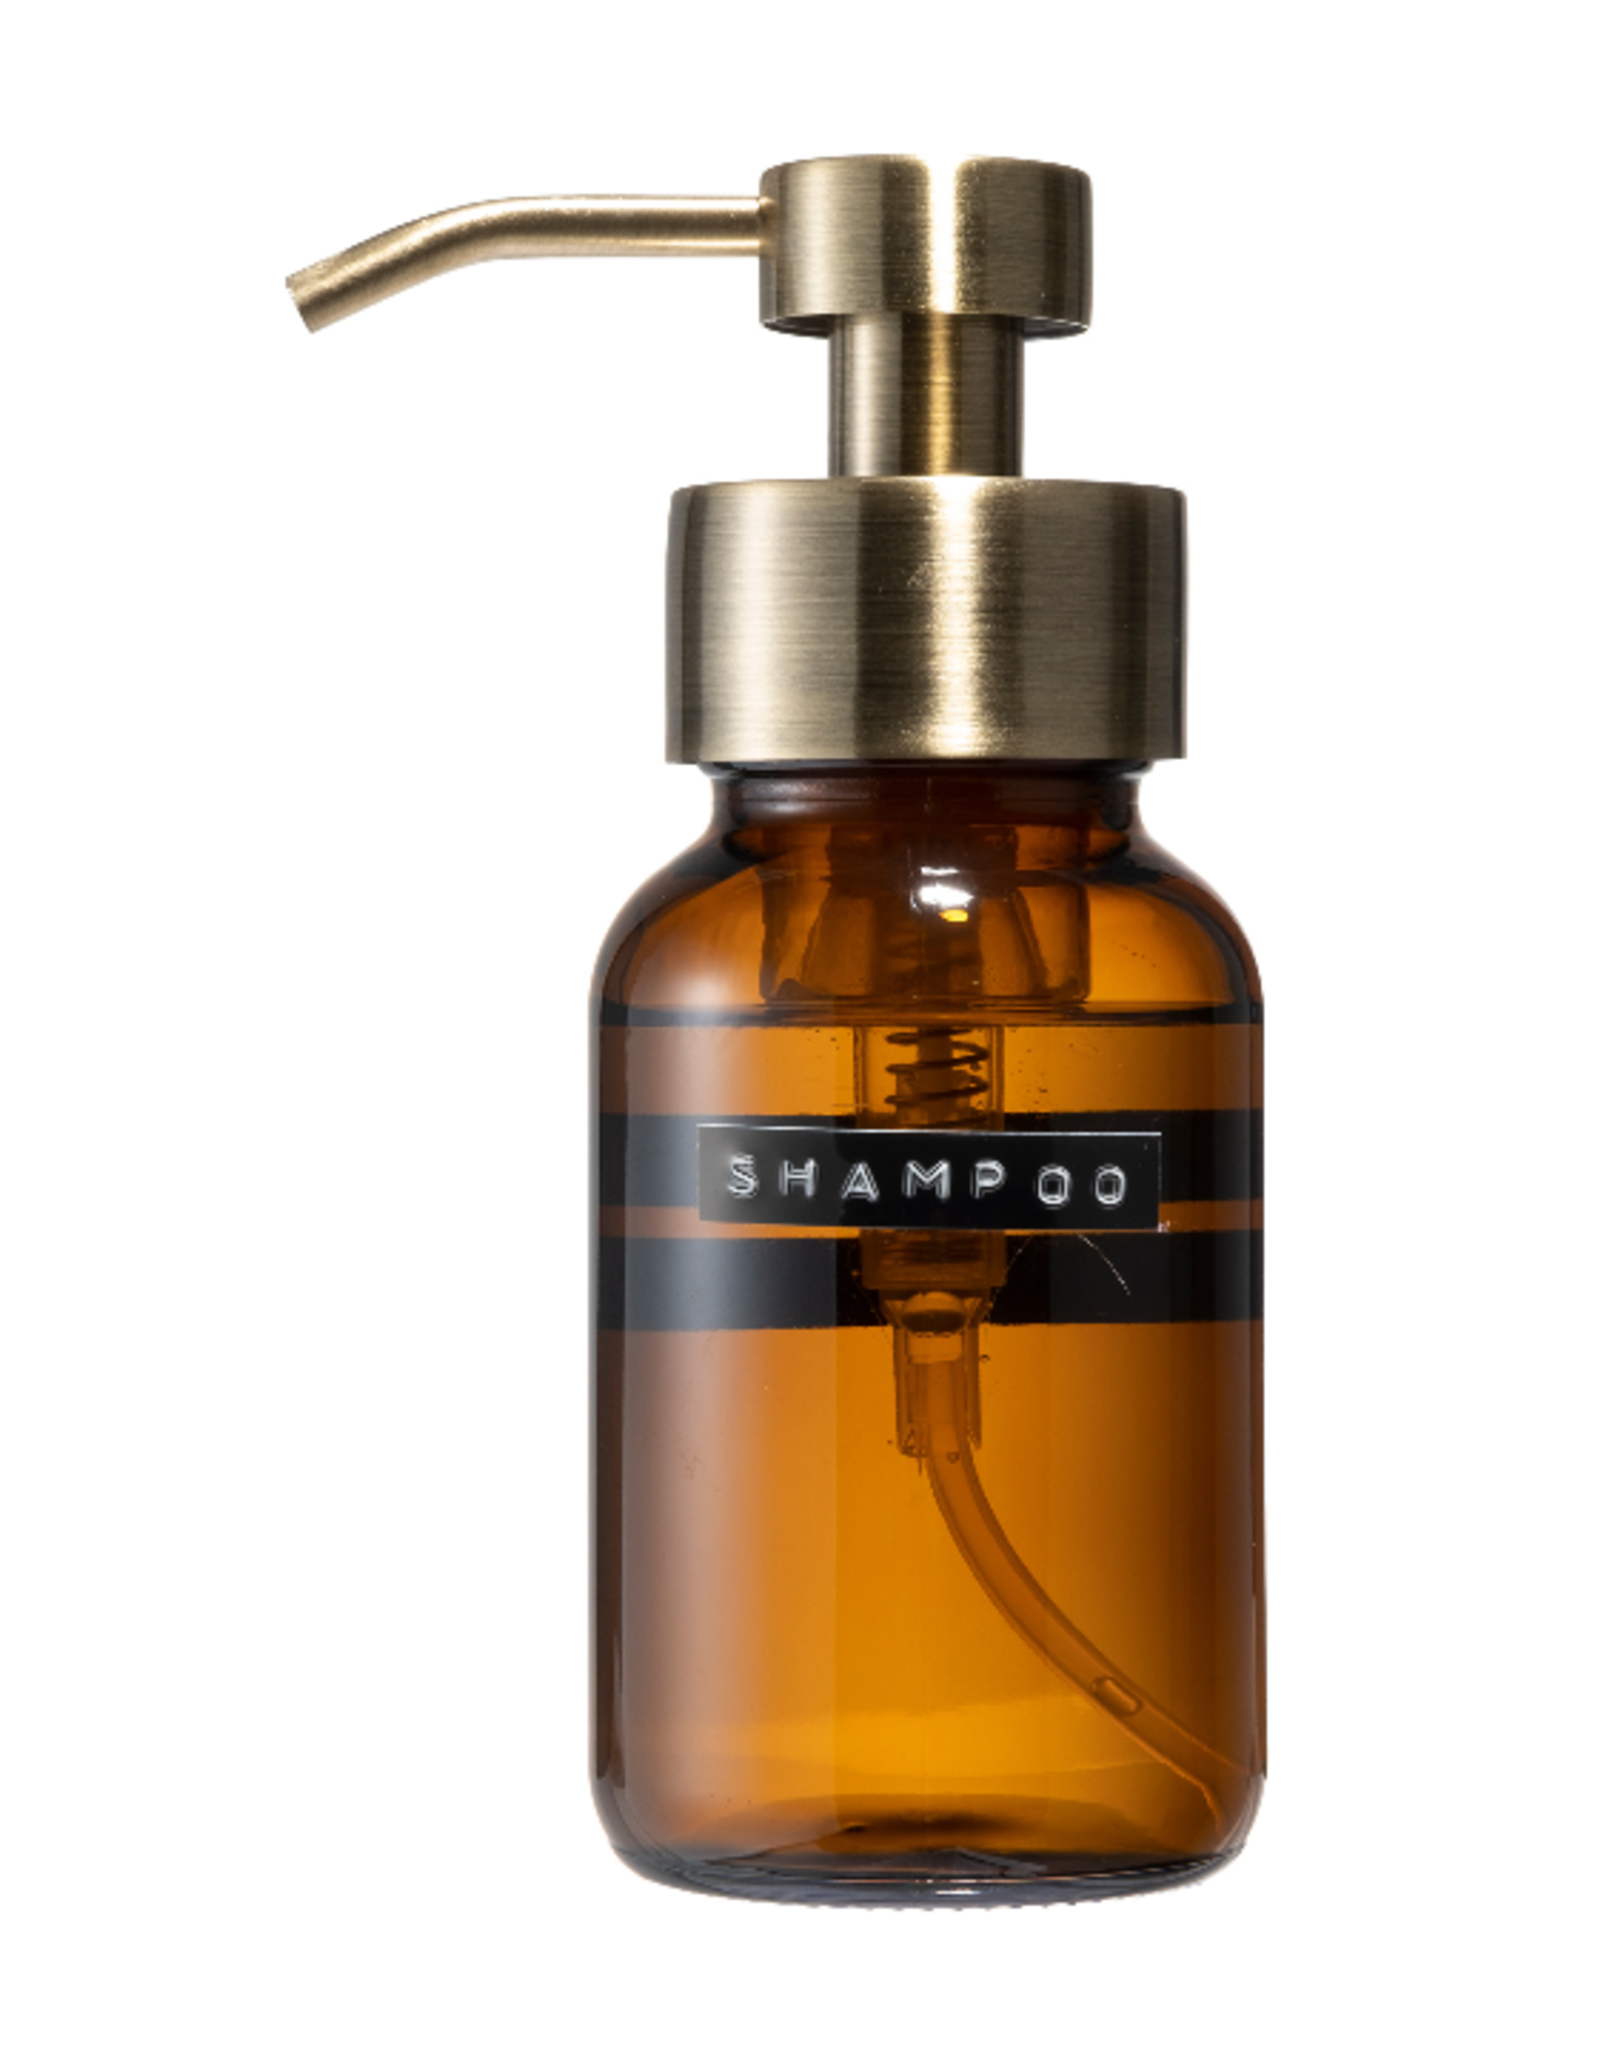 Wellmark Wellmark - Shampoo 250ml - Amber/goud